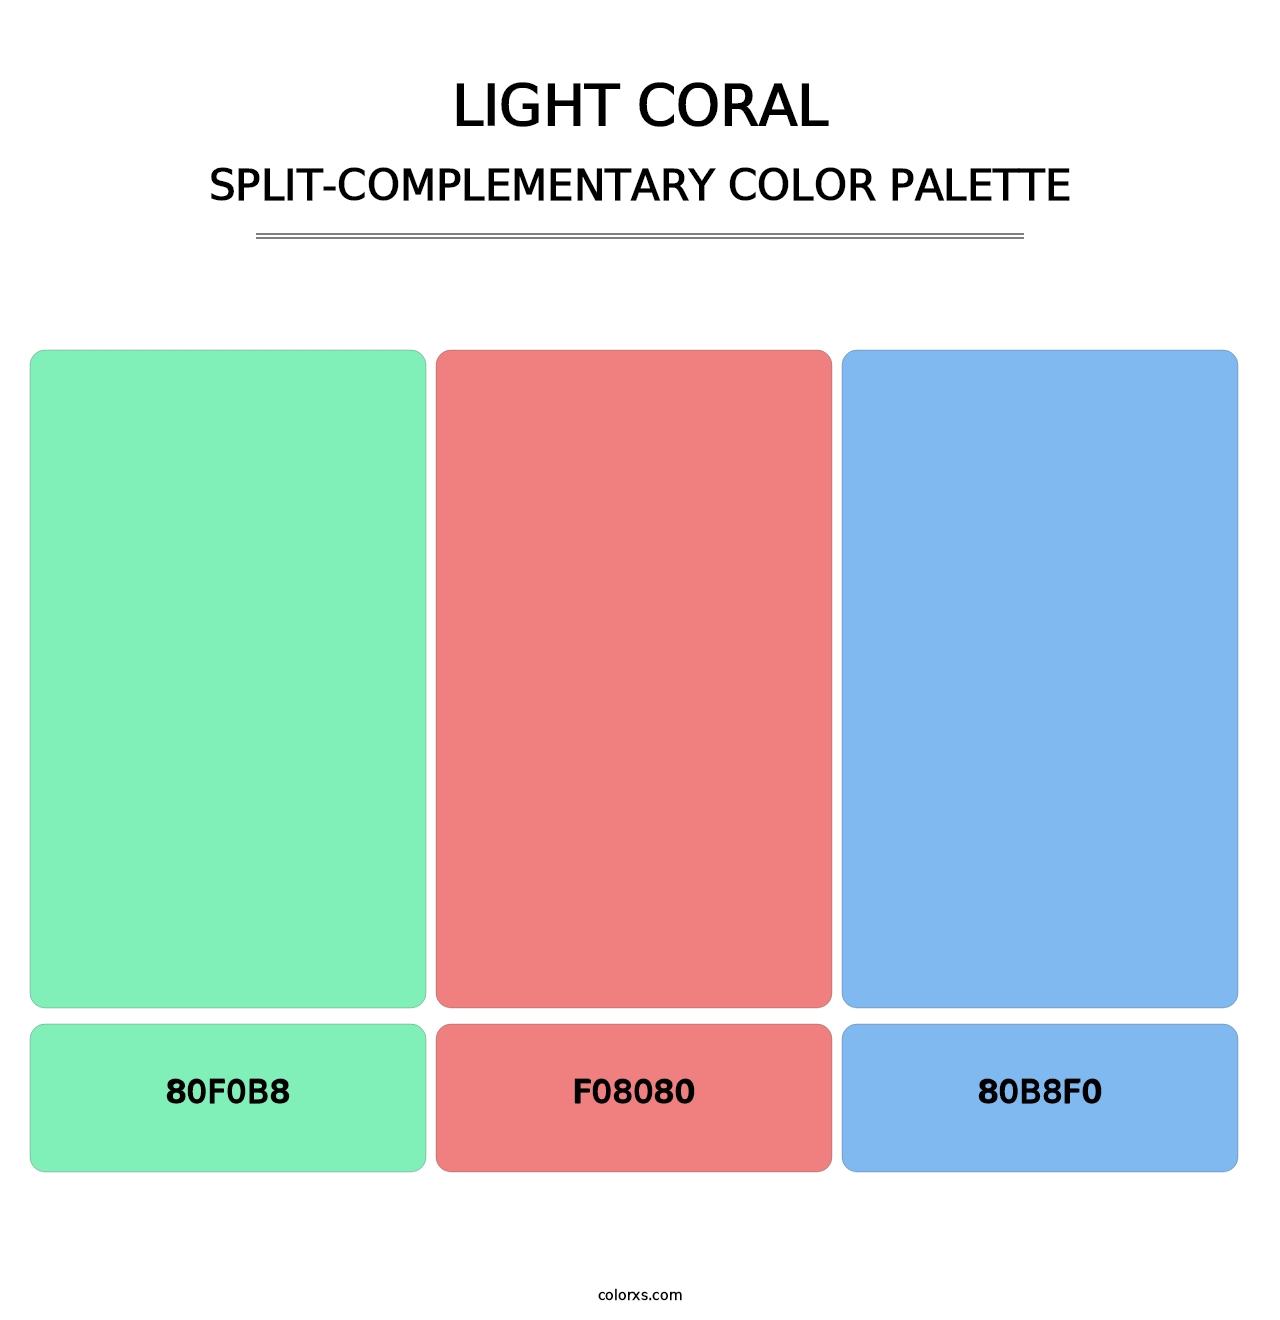 Light Coral - Split-Complementary Color Palette